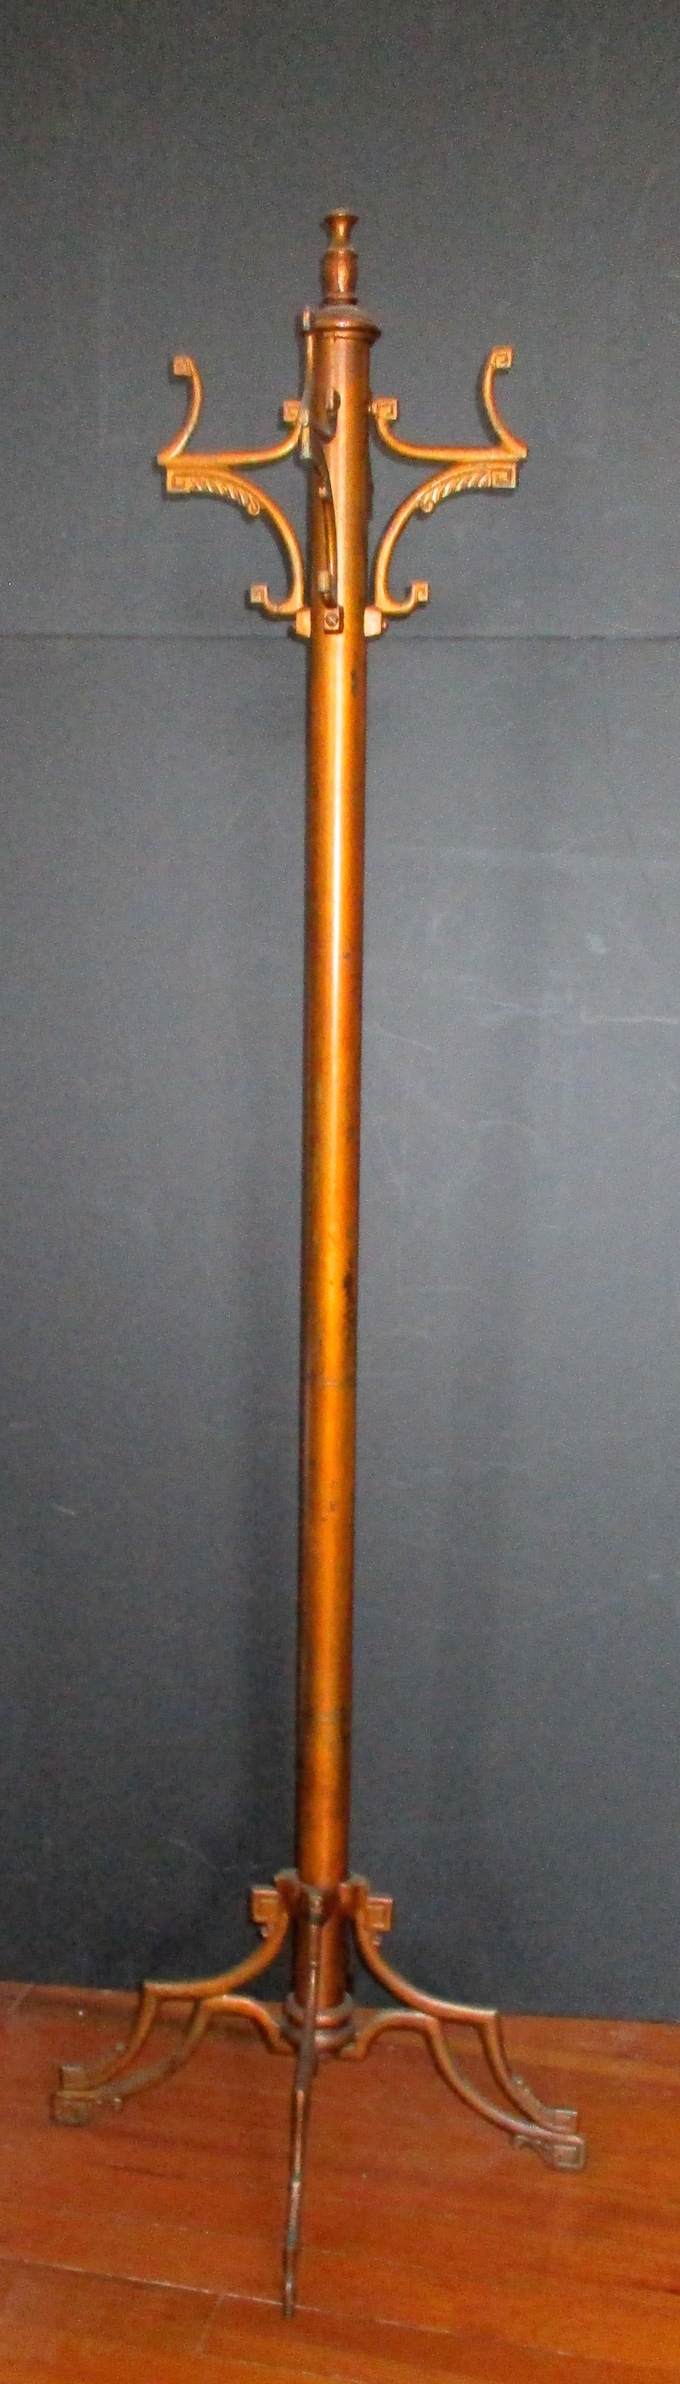 Art Deco iron coat stand (72" Tall x 21" Base)